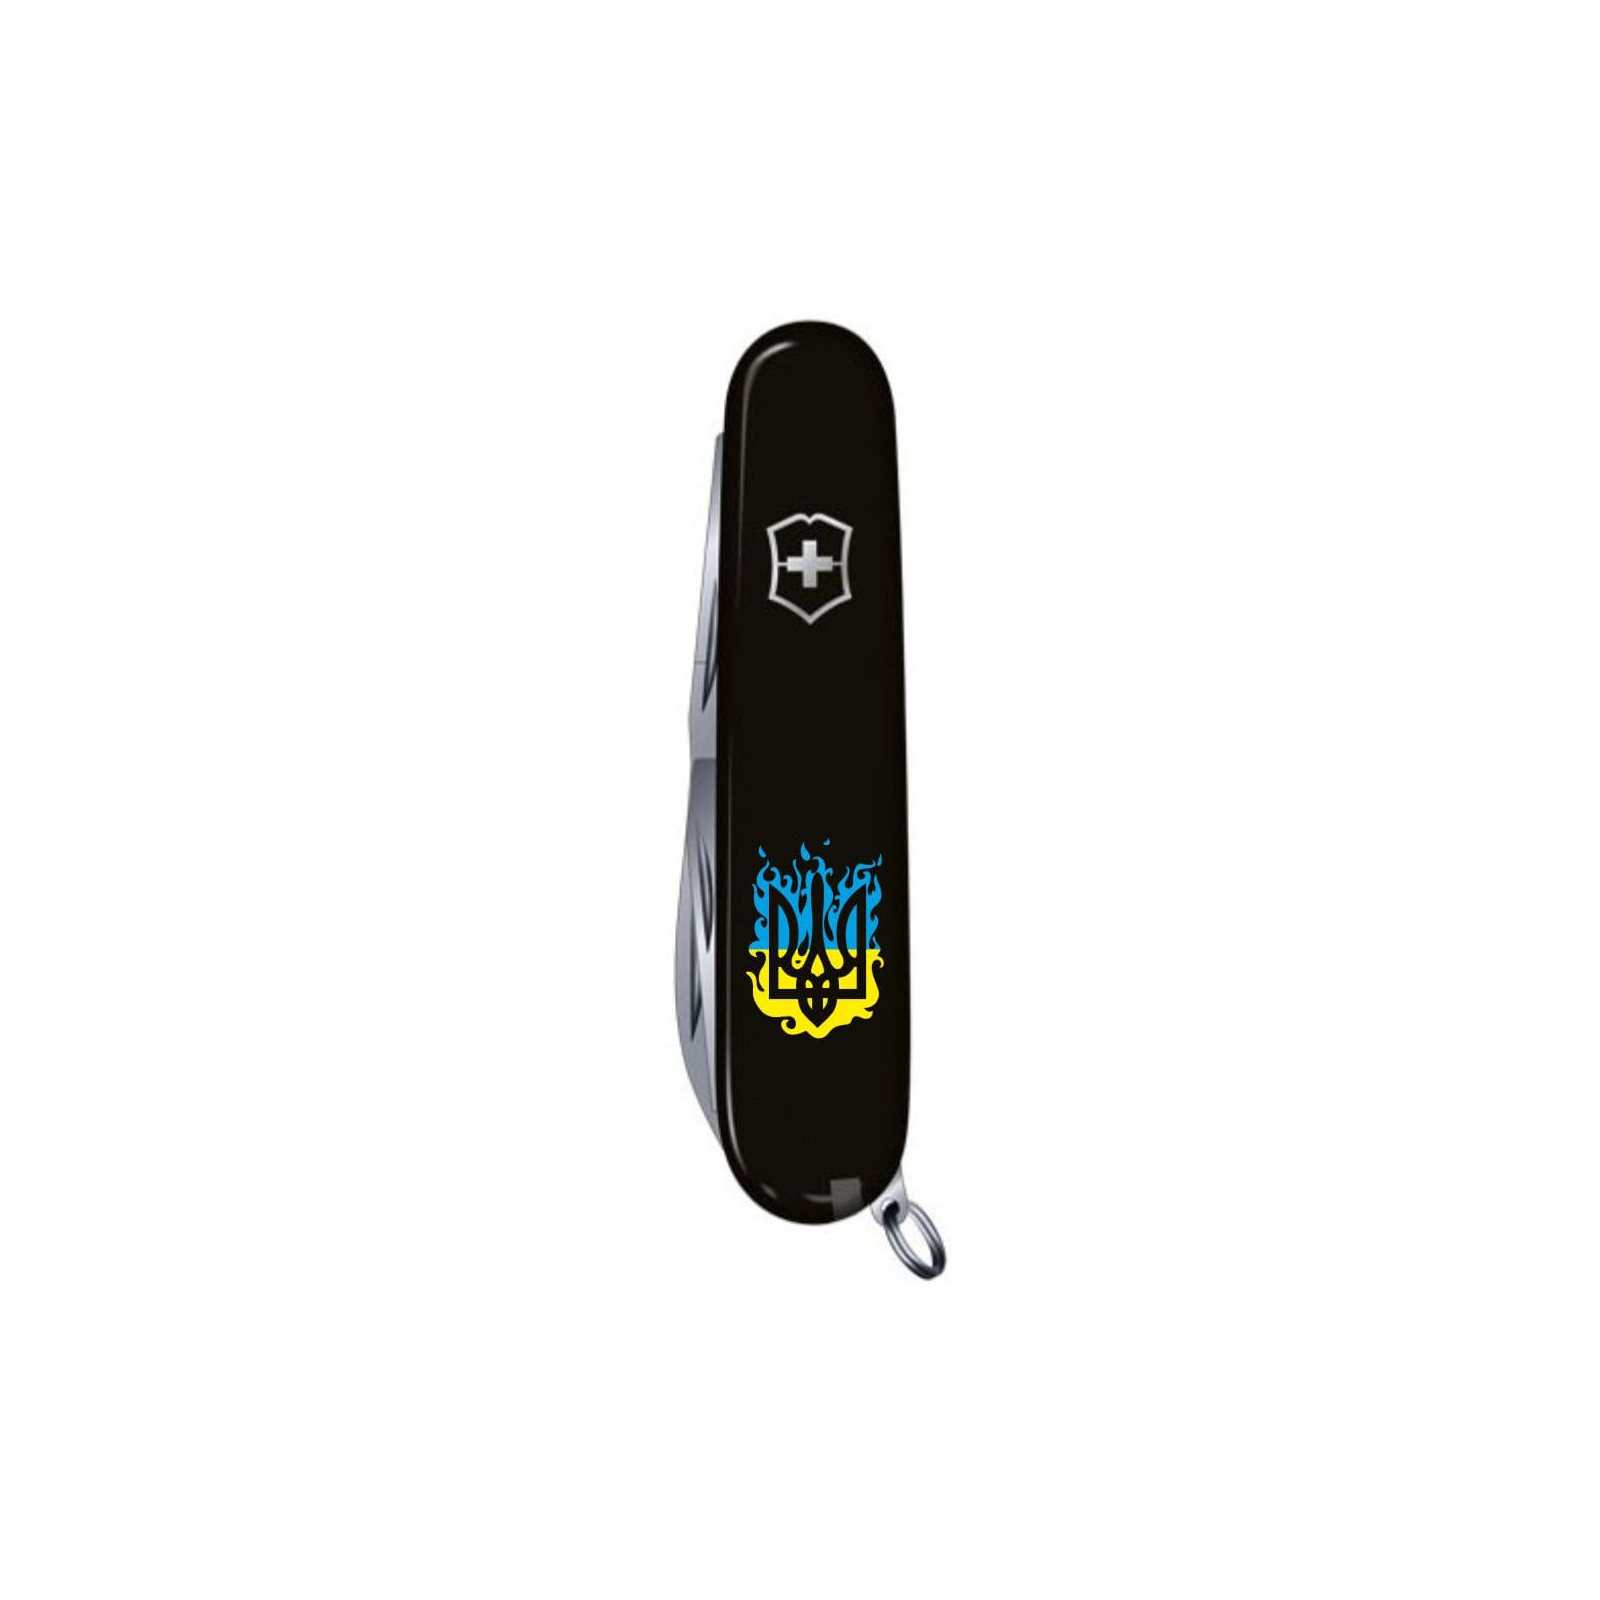 Нож Victorinox Huntsman Ukraine Black "Прапор України" (1.3713.3_T1100u) изображение 5